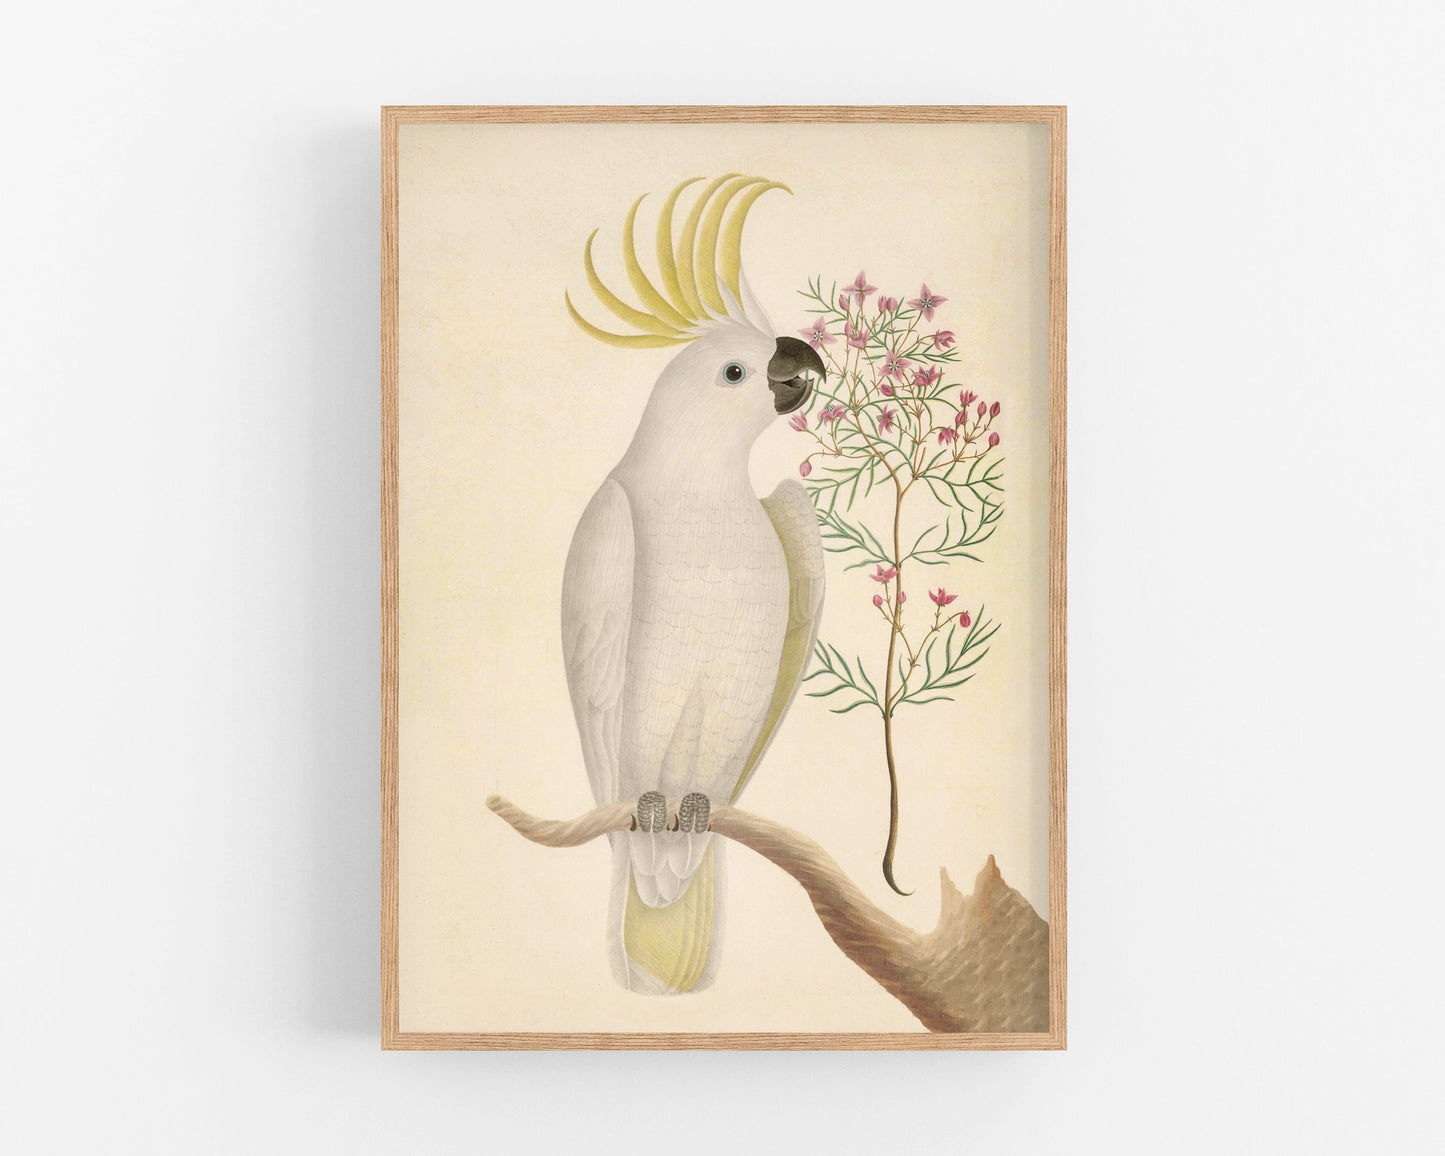 Antique cockatoo & flower art | 18th century bird illustration | Natural history | Animal wall décor | Modern vintage | Eco-friendly gift